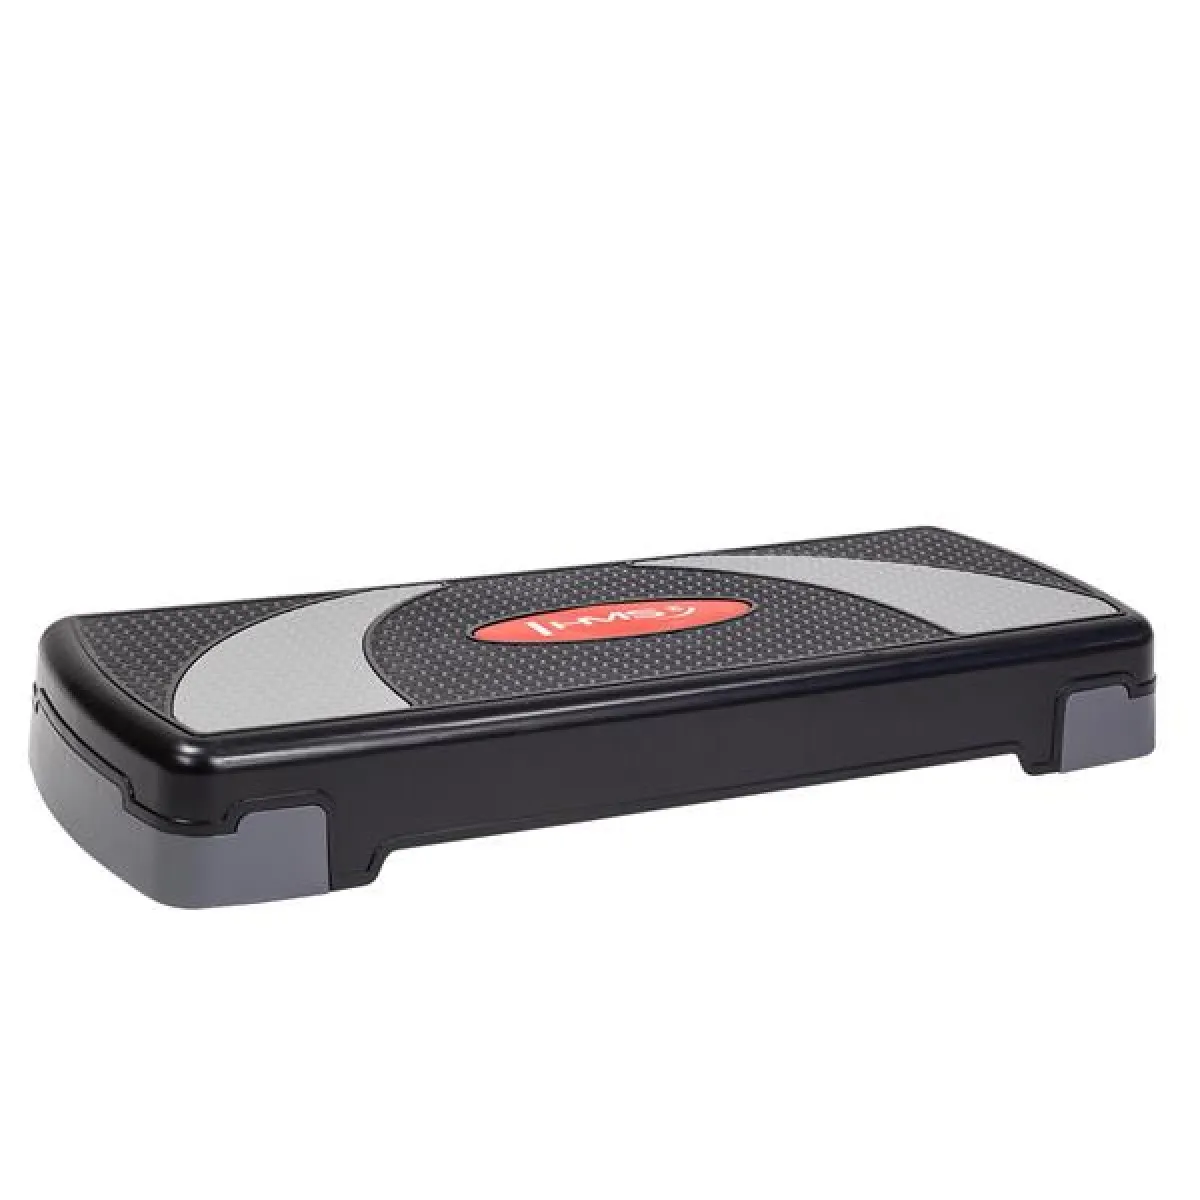 Aerobic stepper - stepping board black/grey height adjustable